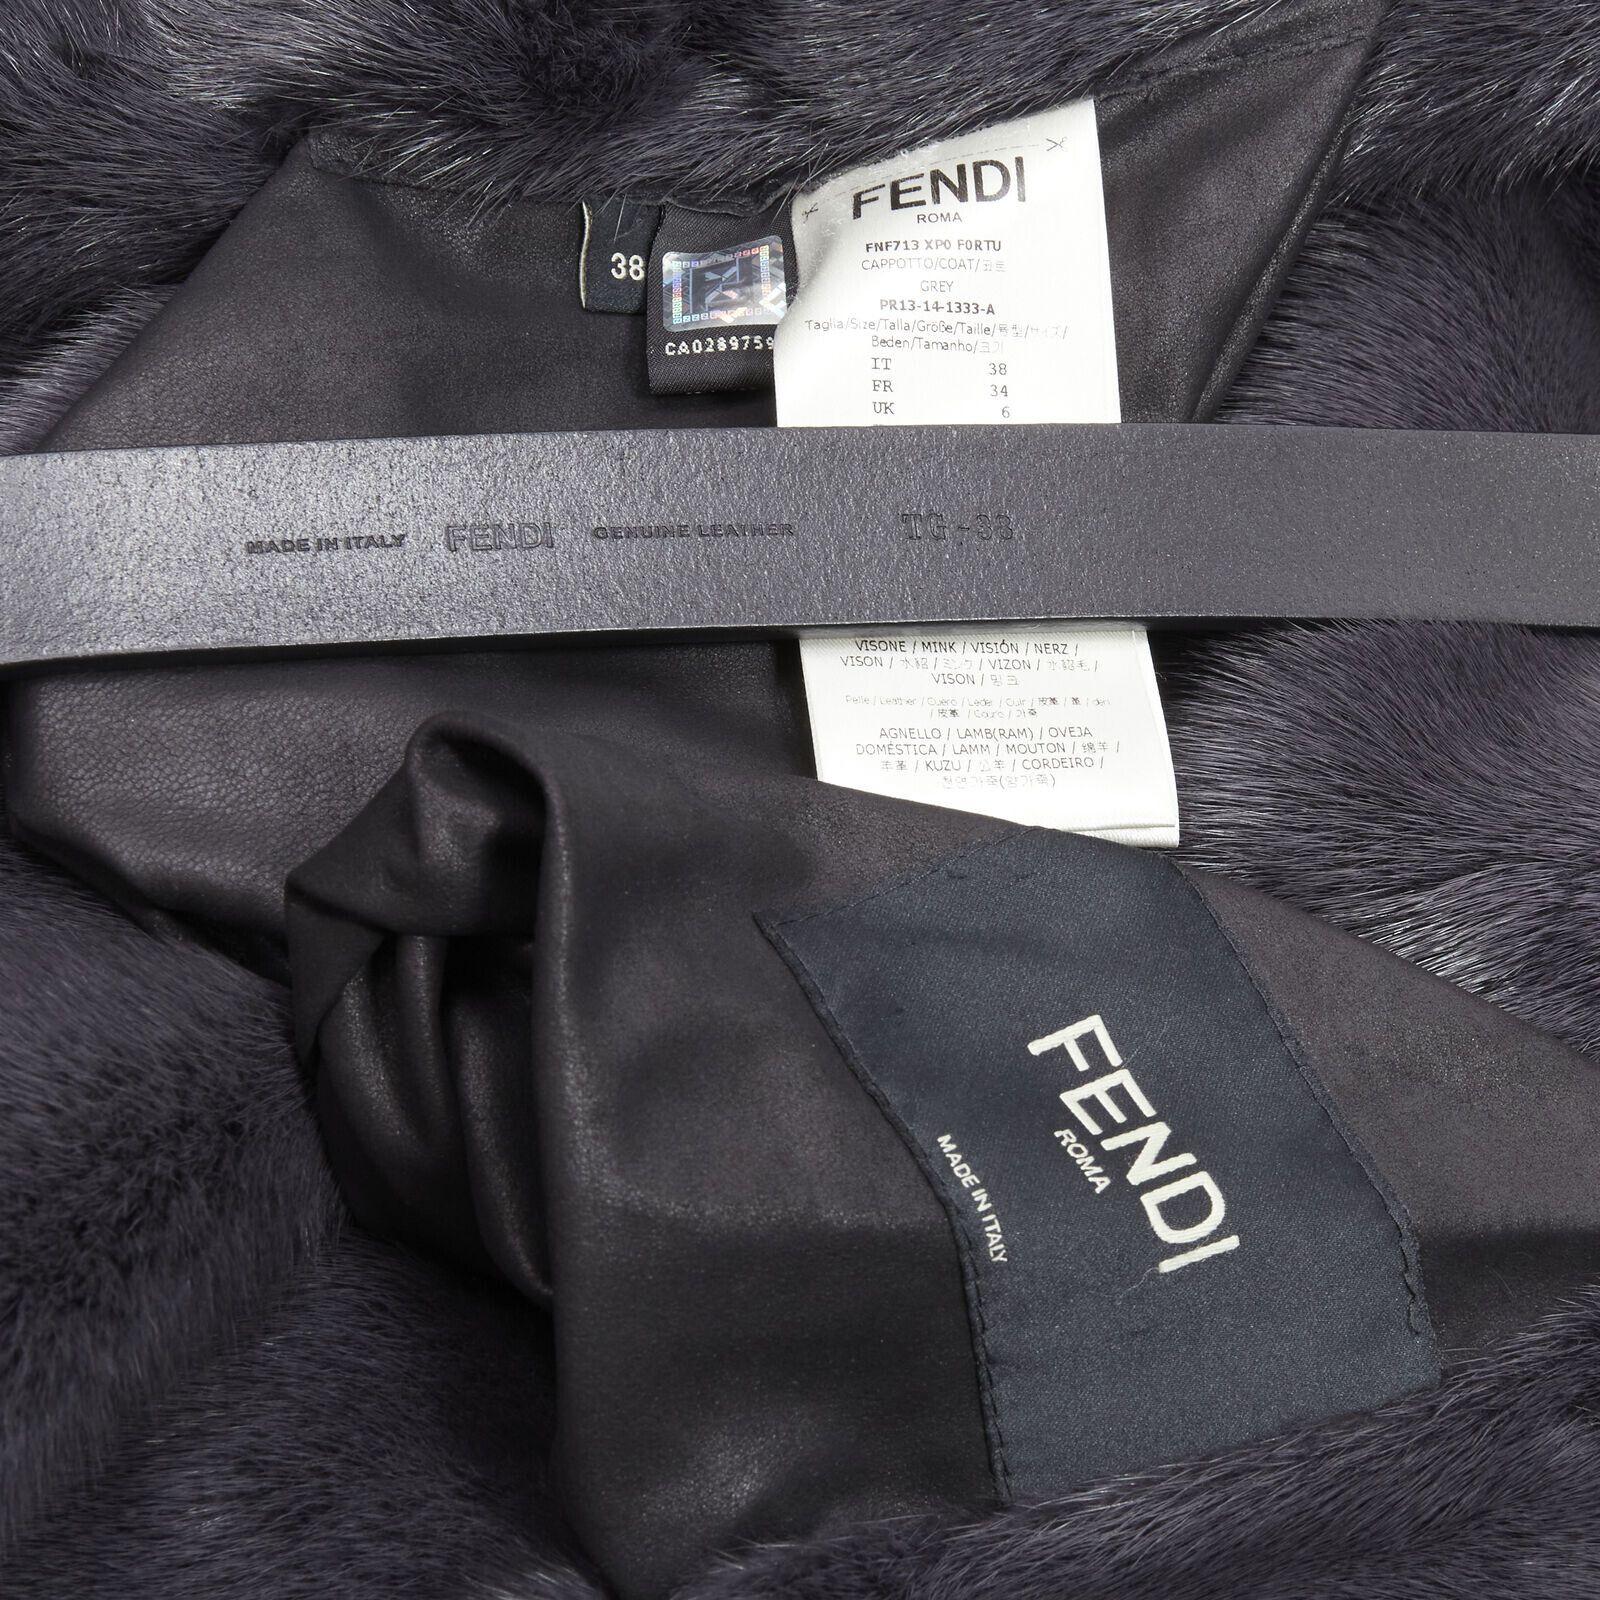 Fendi FENDI grey black fur leather 4-way reversible zip belted coat jacket IT38 Size XS / US 0-2 / IT 36-38 - 12 Preview